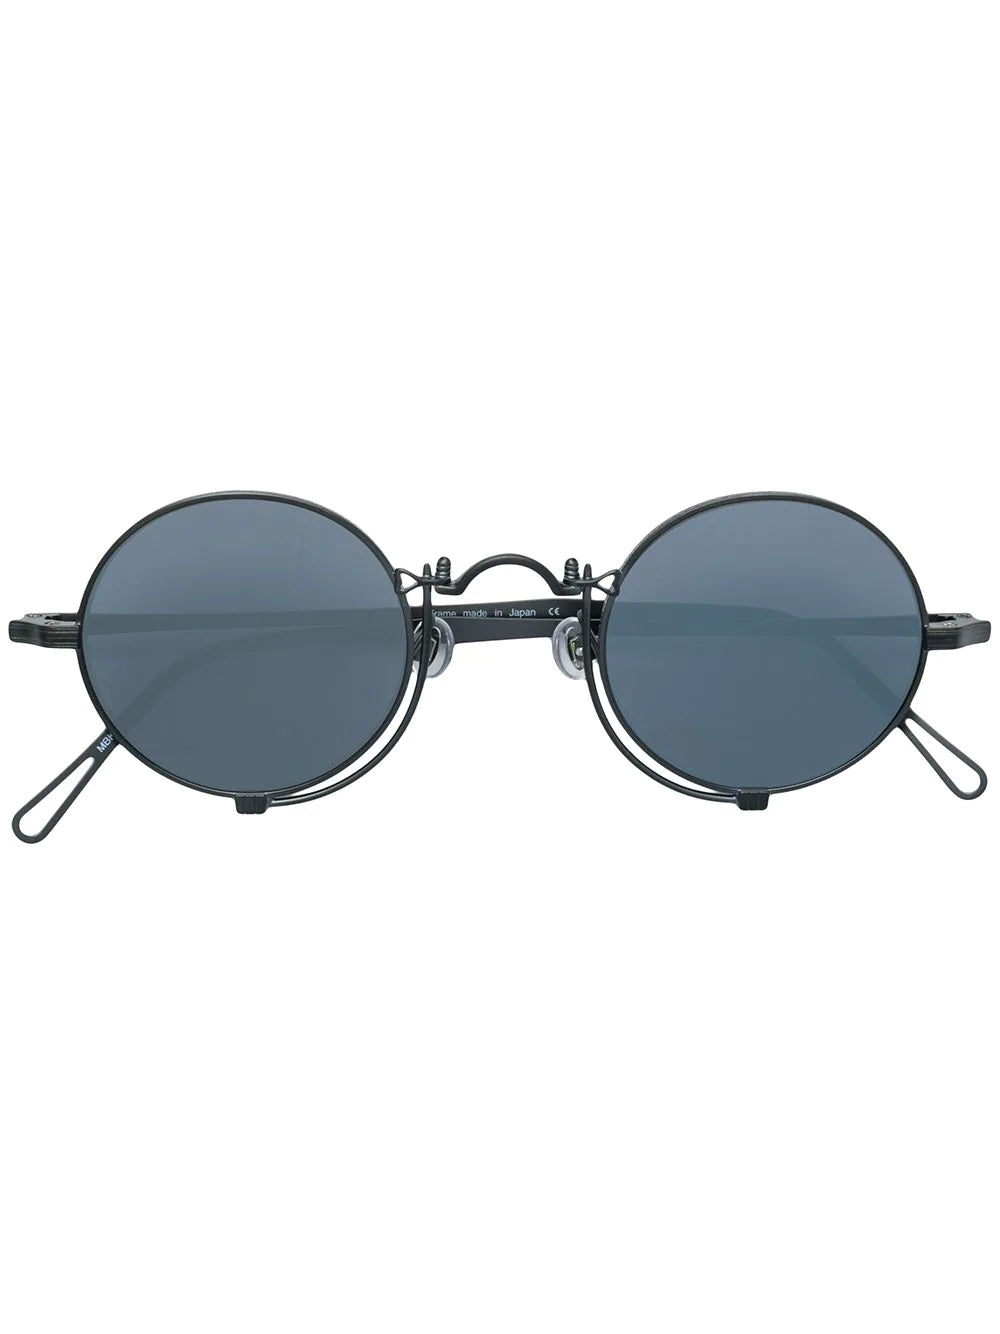 MATSUDA - round frame sunglasses - SHEET-1 - LISBON